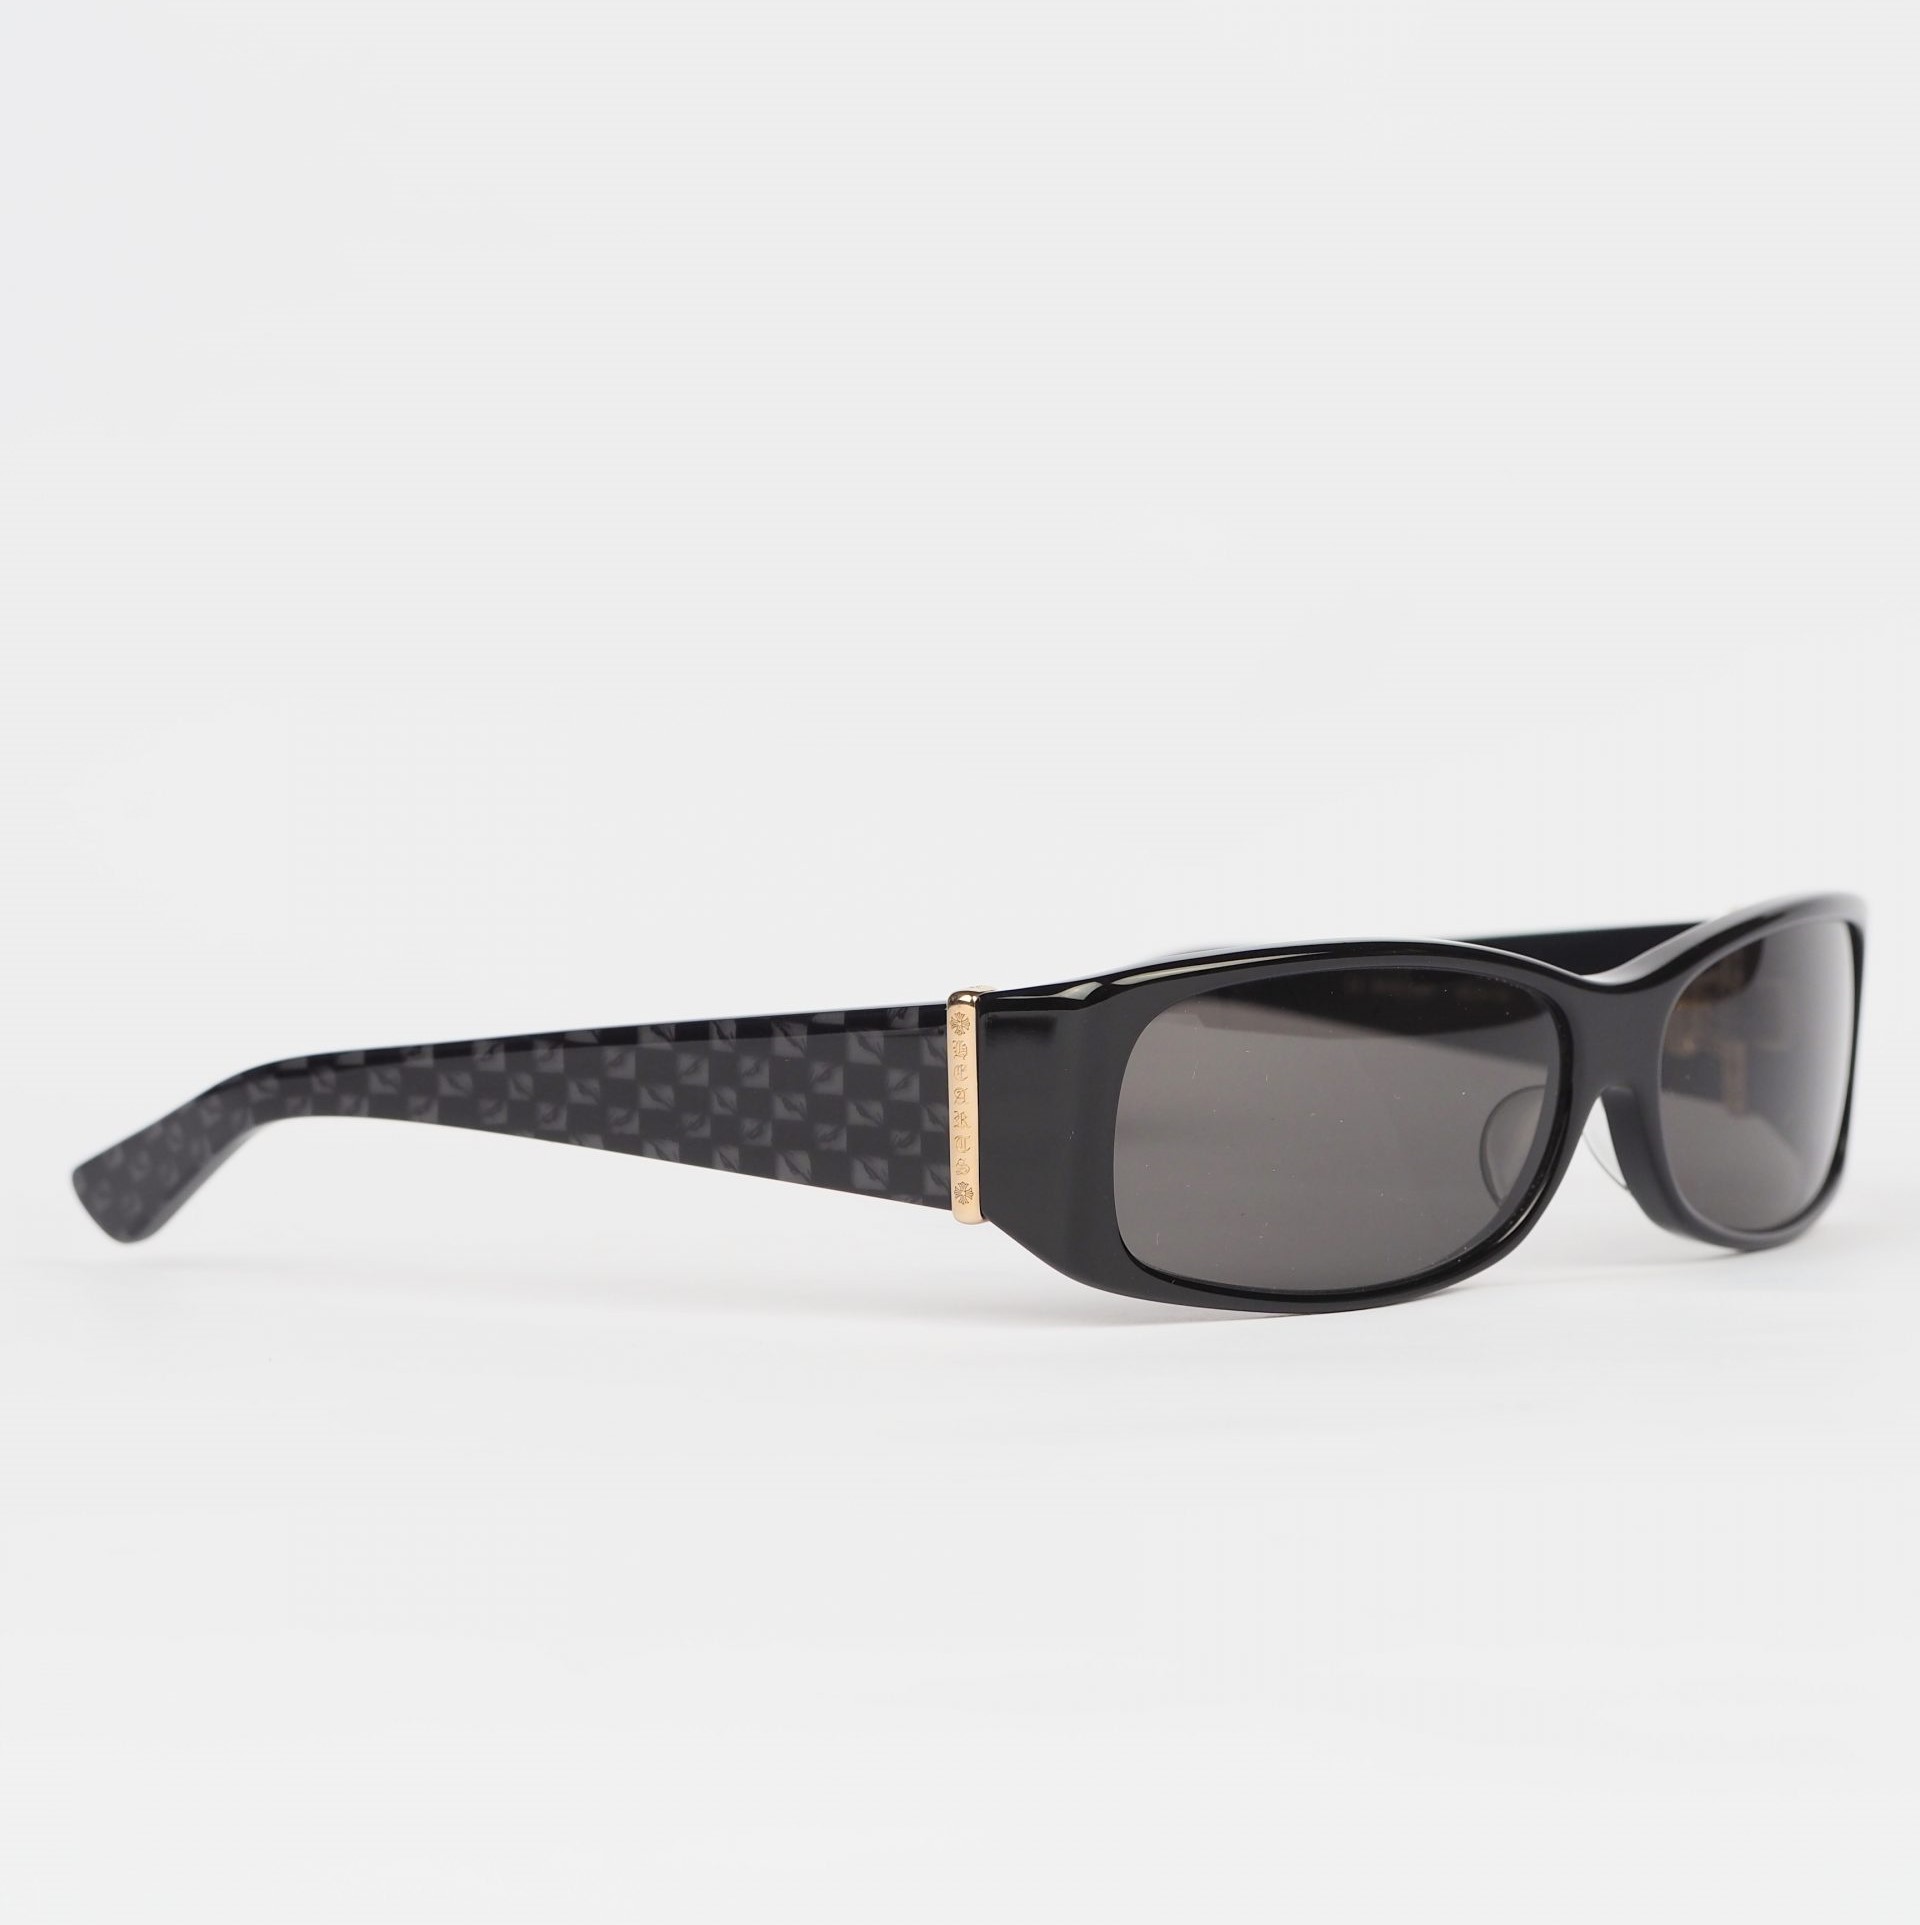 Chrome Hearts Glasses Sunglasses ULEIN – BLACKGOLD PLATED 5